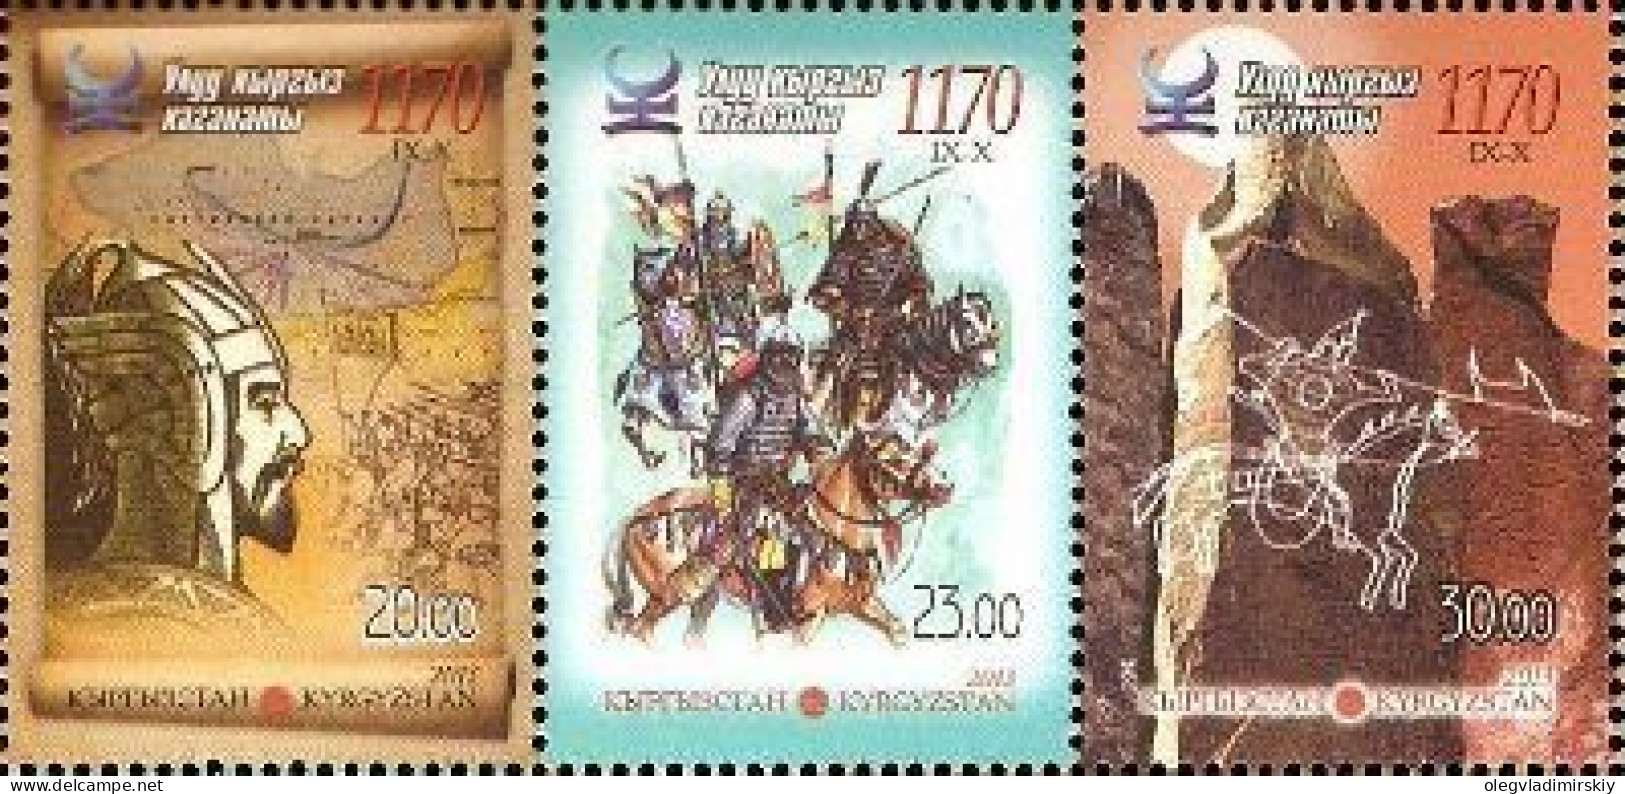 Kyrgyzstan 2013 Great Kyrgyz Kaganate 1170 Years Set Of 3 Stamps In Strip MNH - Arqueología